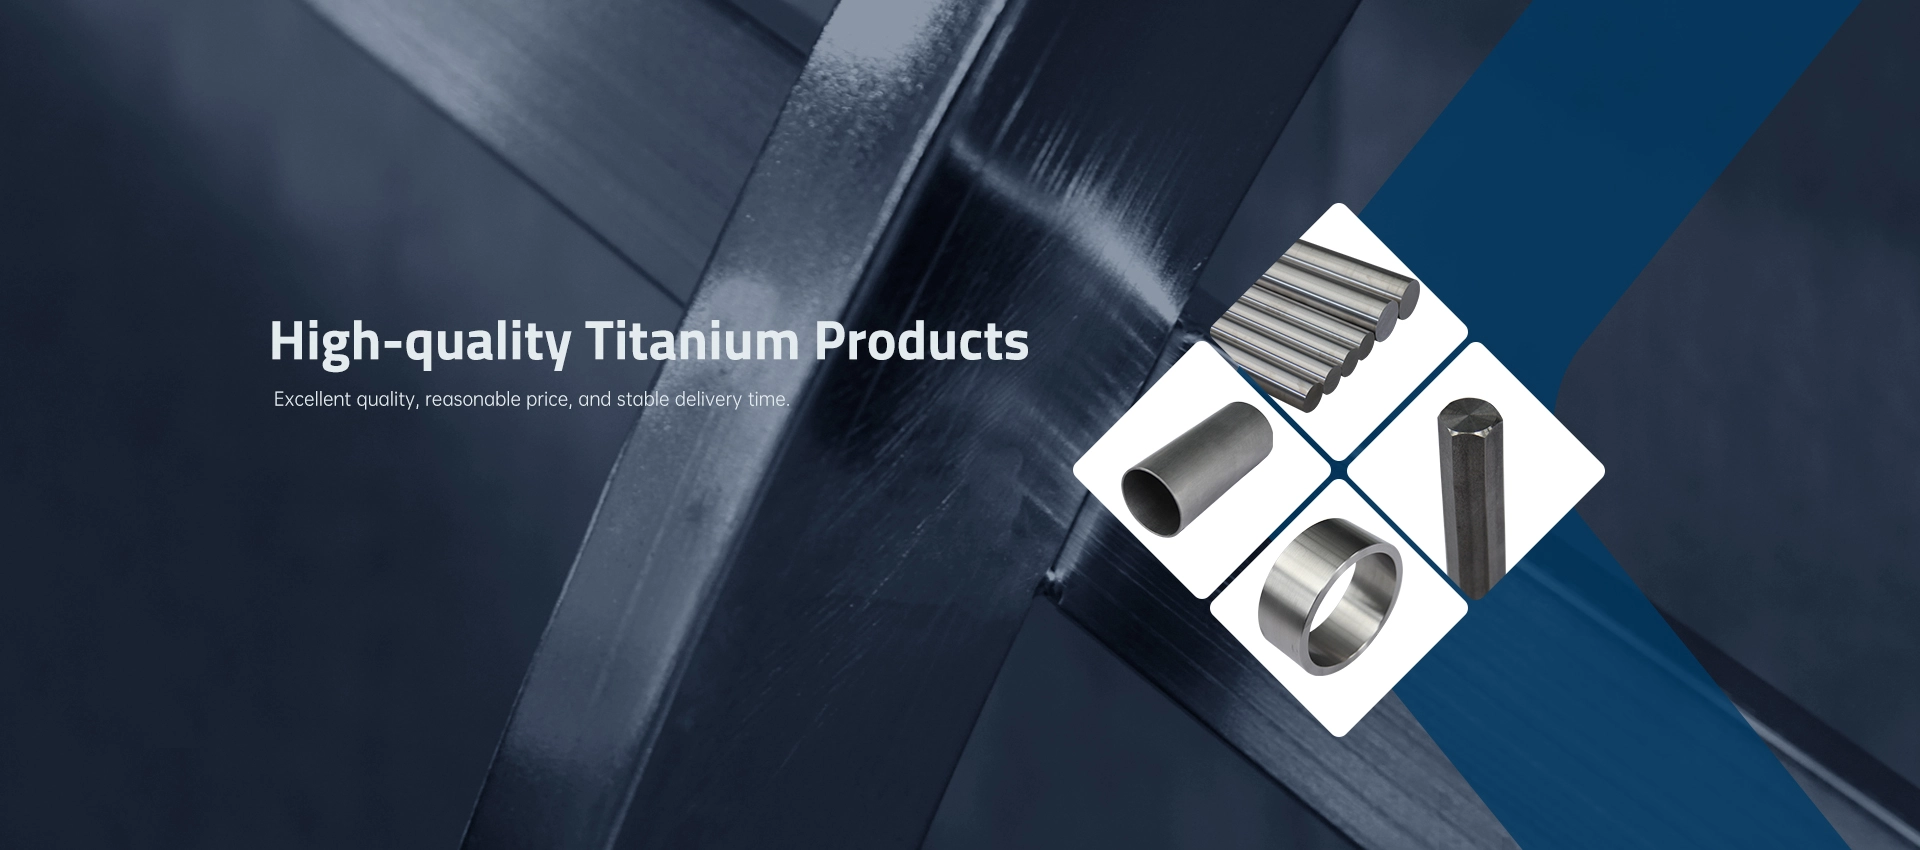 High-quality Titanium Products